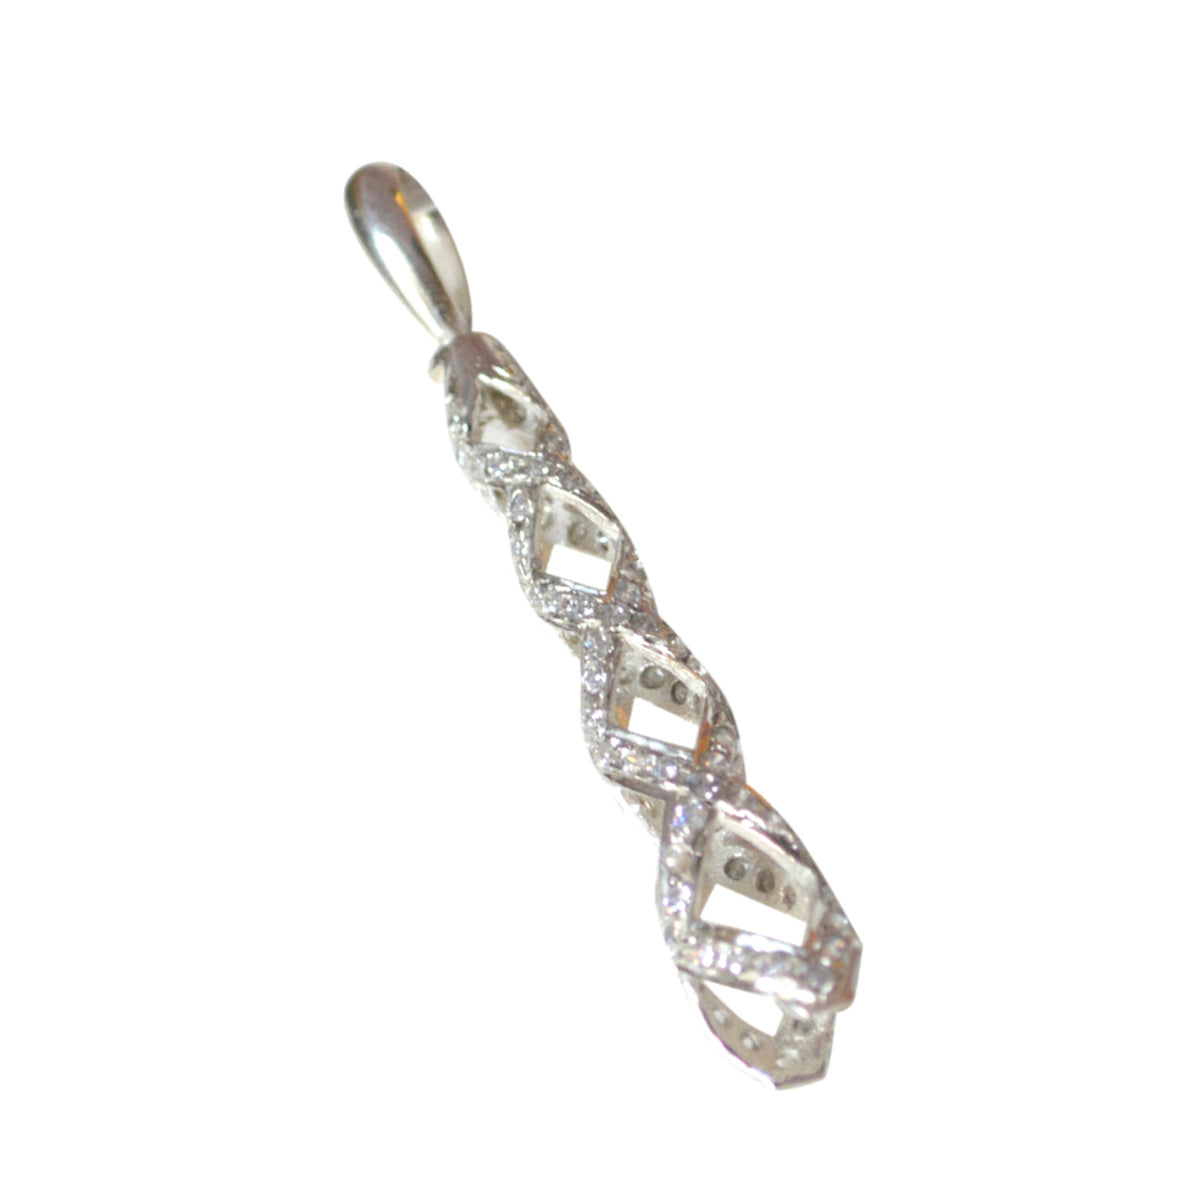 Riyo encantadora piedra preciosa redonda facetada blanca cz 1104 colgante de plata esterlina regalo para novia